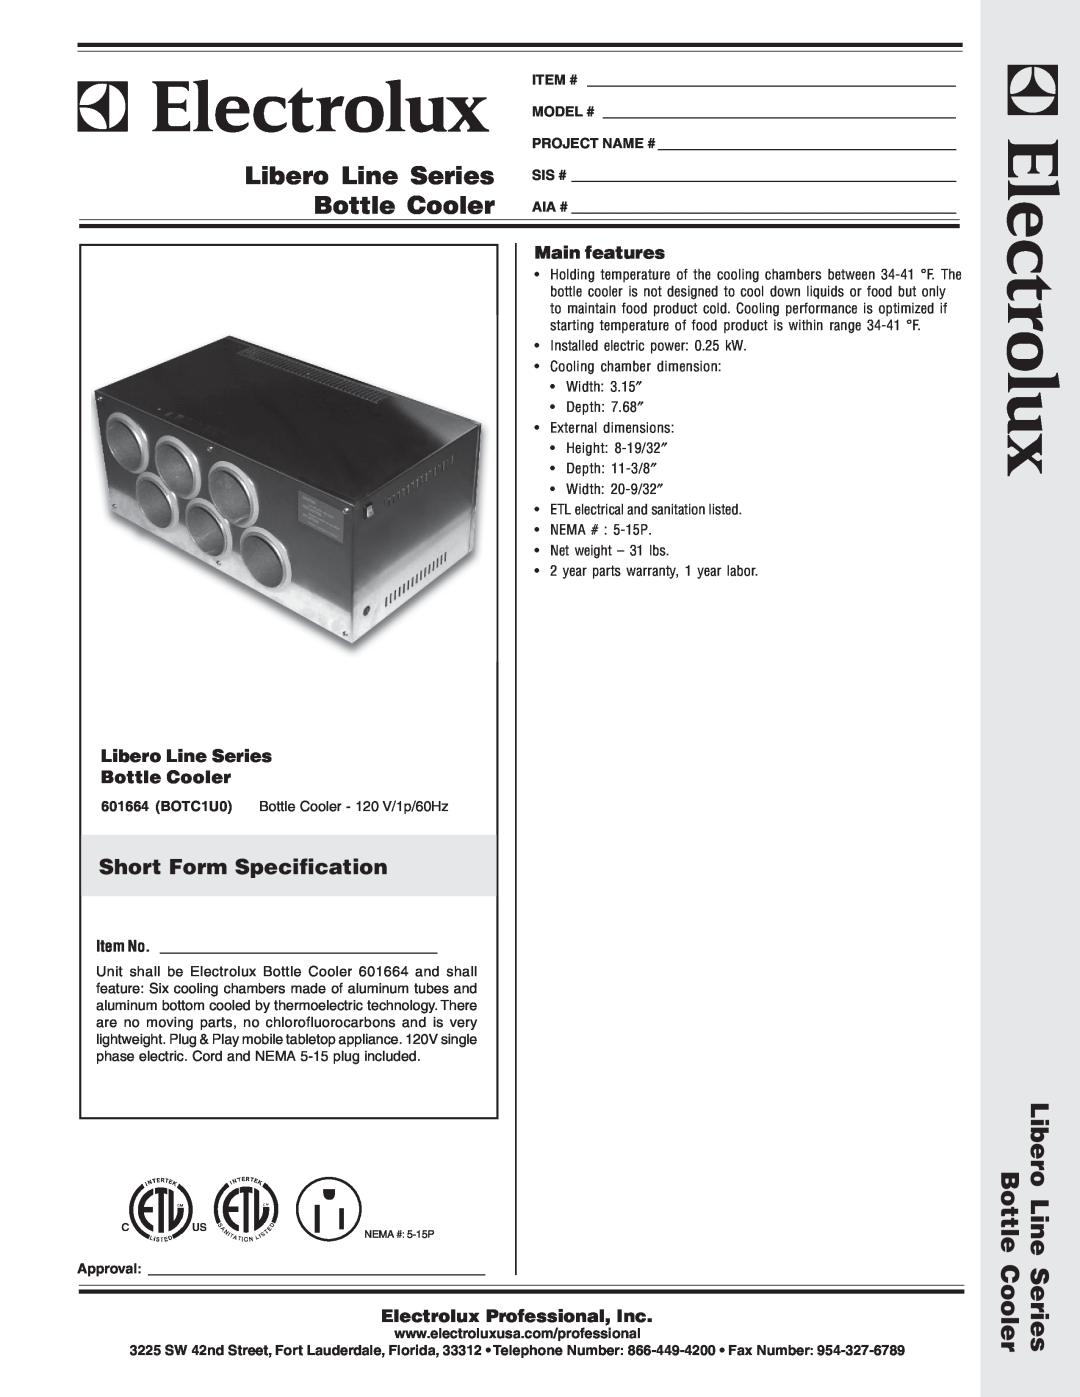 Electrolux BOTC1U0 dimensions Short Form Specification, Main features, Libero Line Series Bottle Cooler, Item No, Item # 